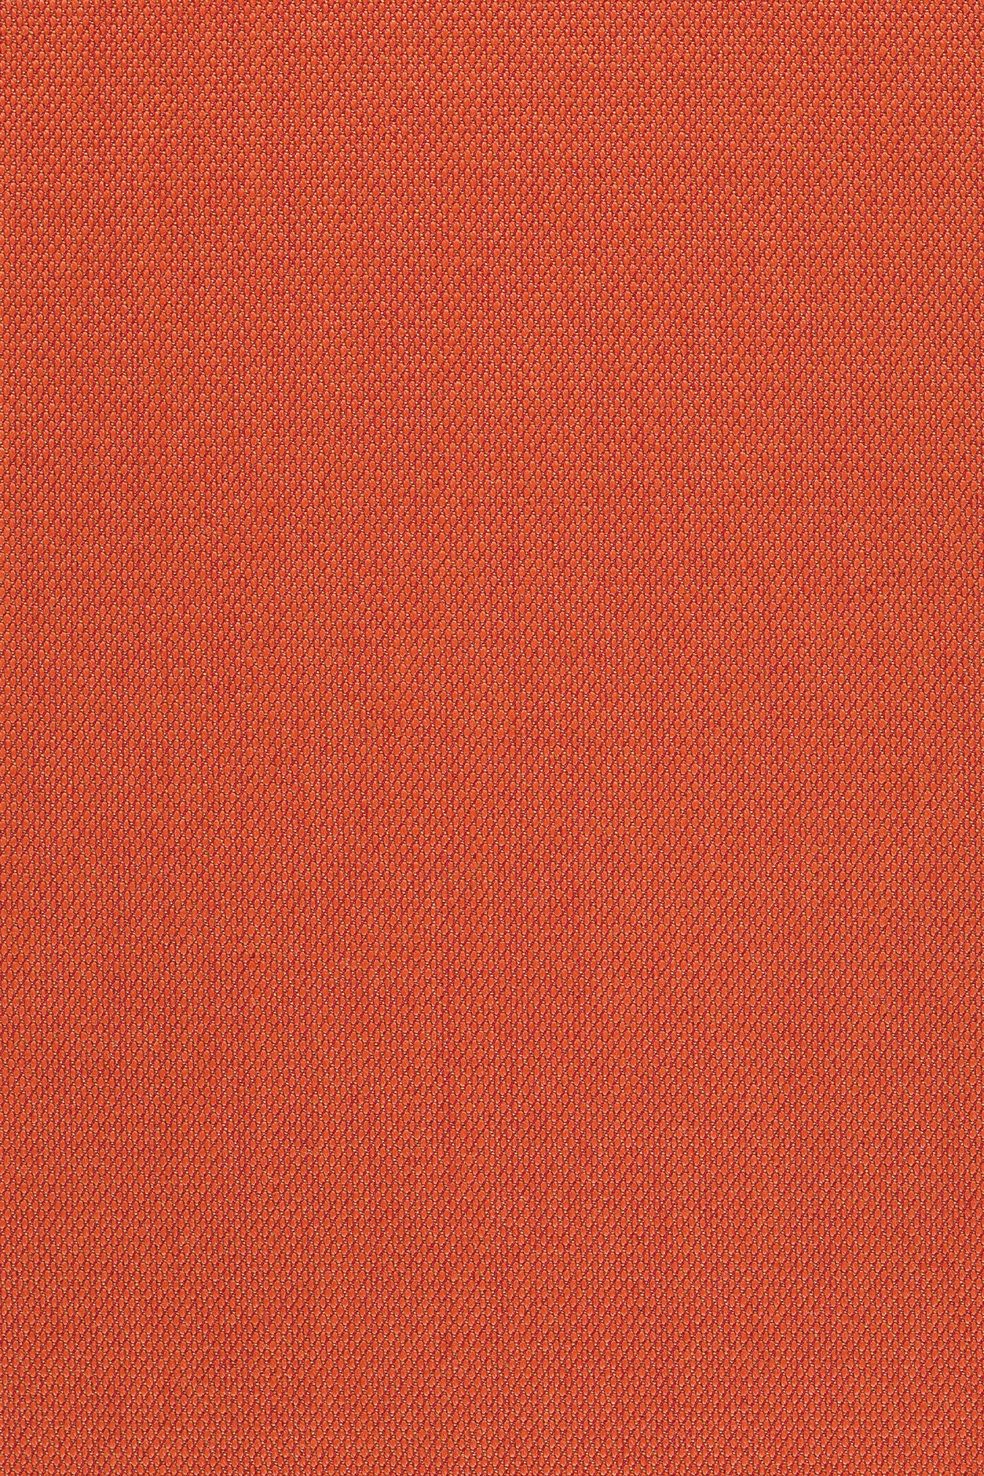 Fabric sample Steelcut Trio 3 533 red